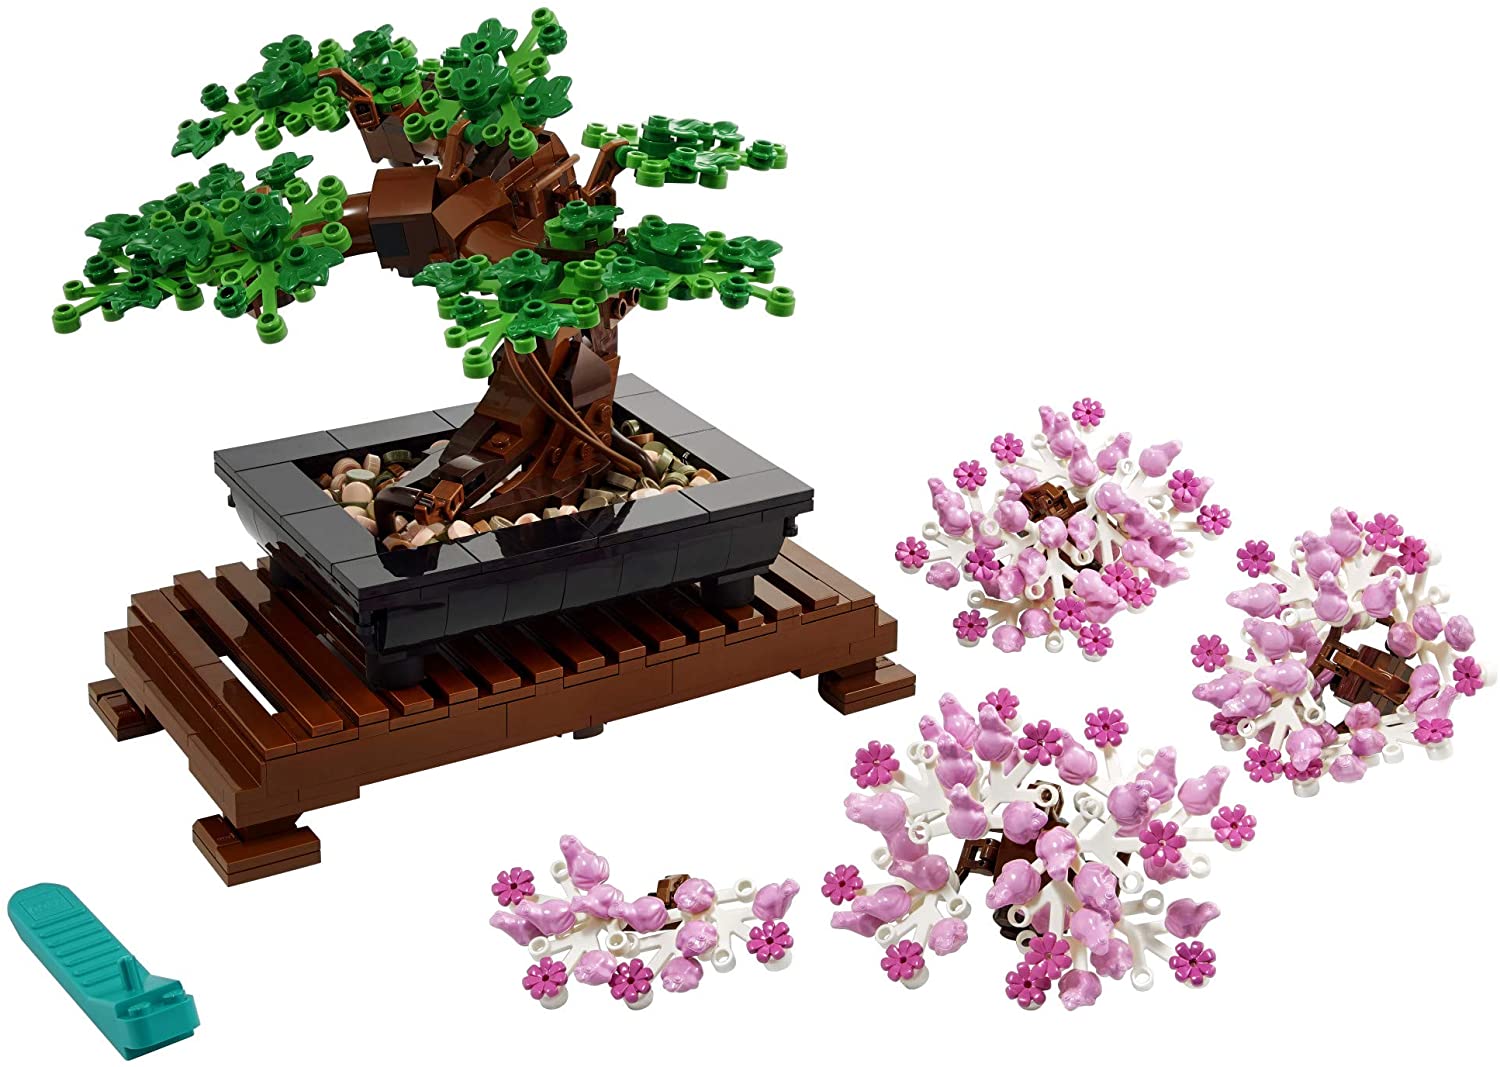 878 Piece Lego Bonsai Tree Building Kit $40.33 + Free Shipping @ Amazon